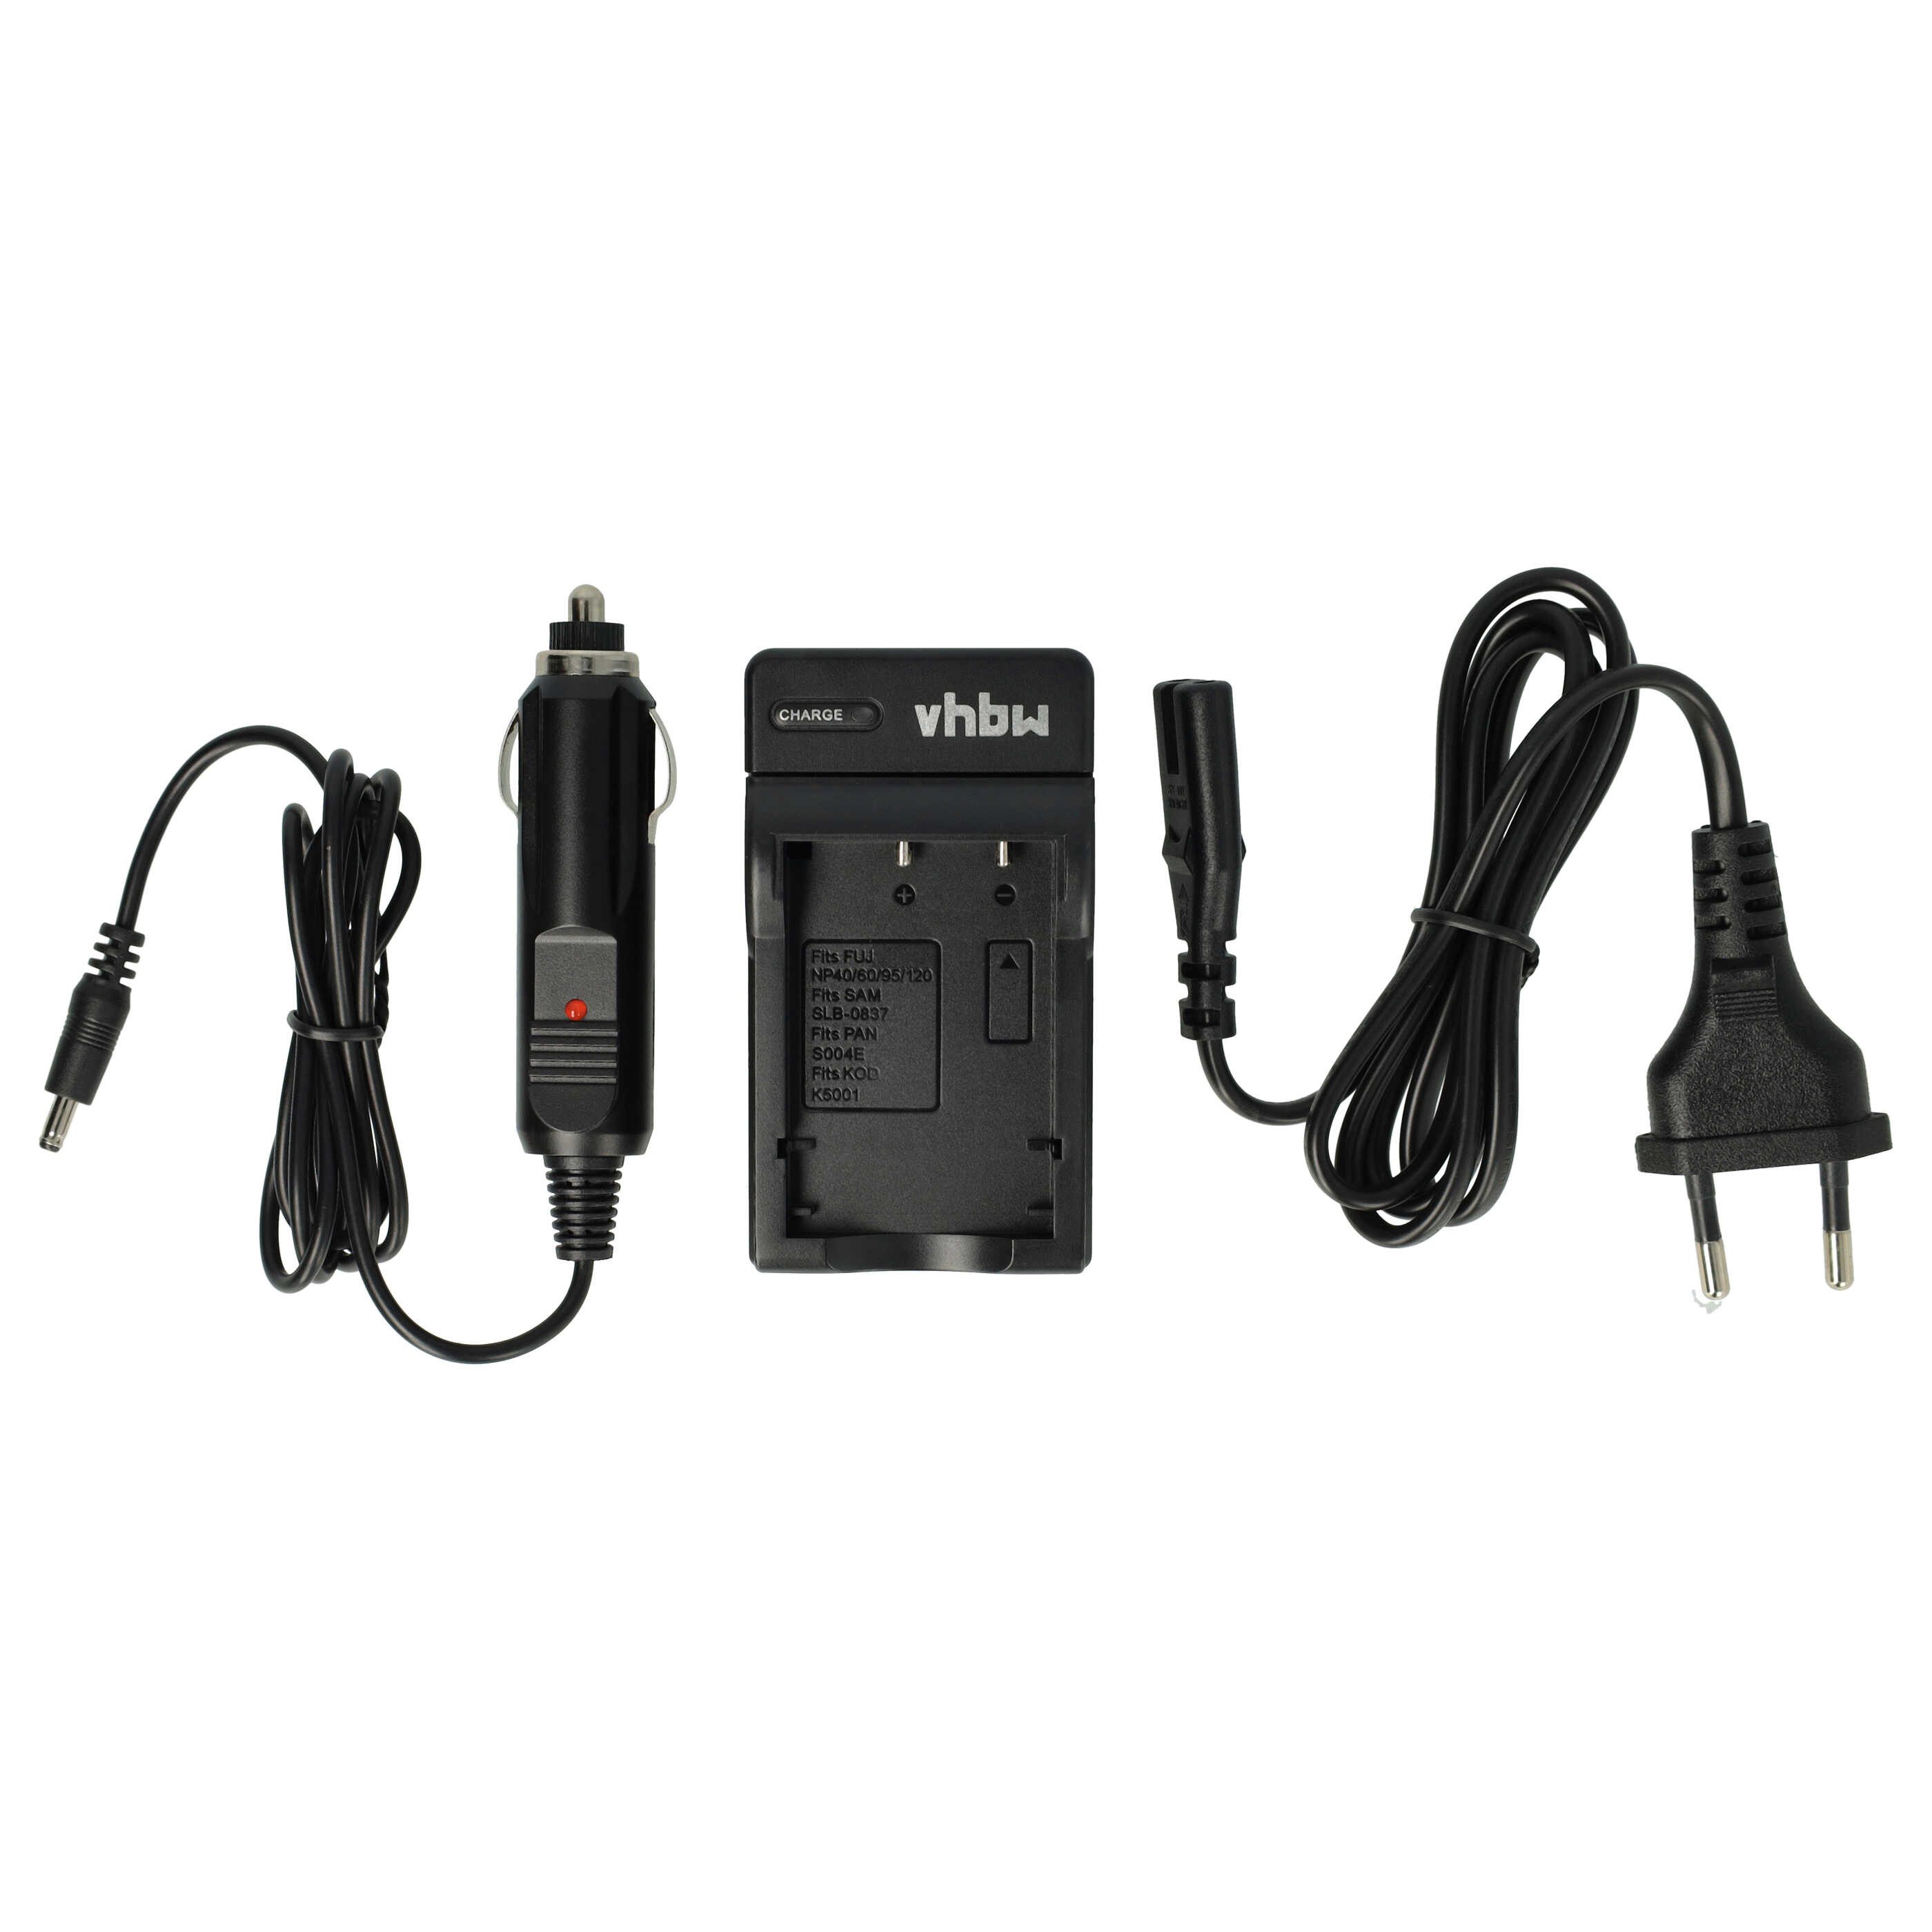 vhbw passend für Casio QV-R Serie QV-R4, QV-R3 Kamera / Foto DSLR / Foto Kamera-Ladegerät